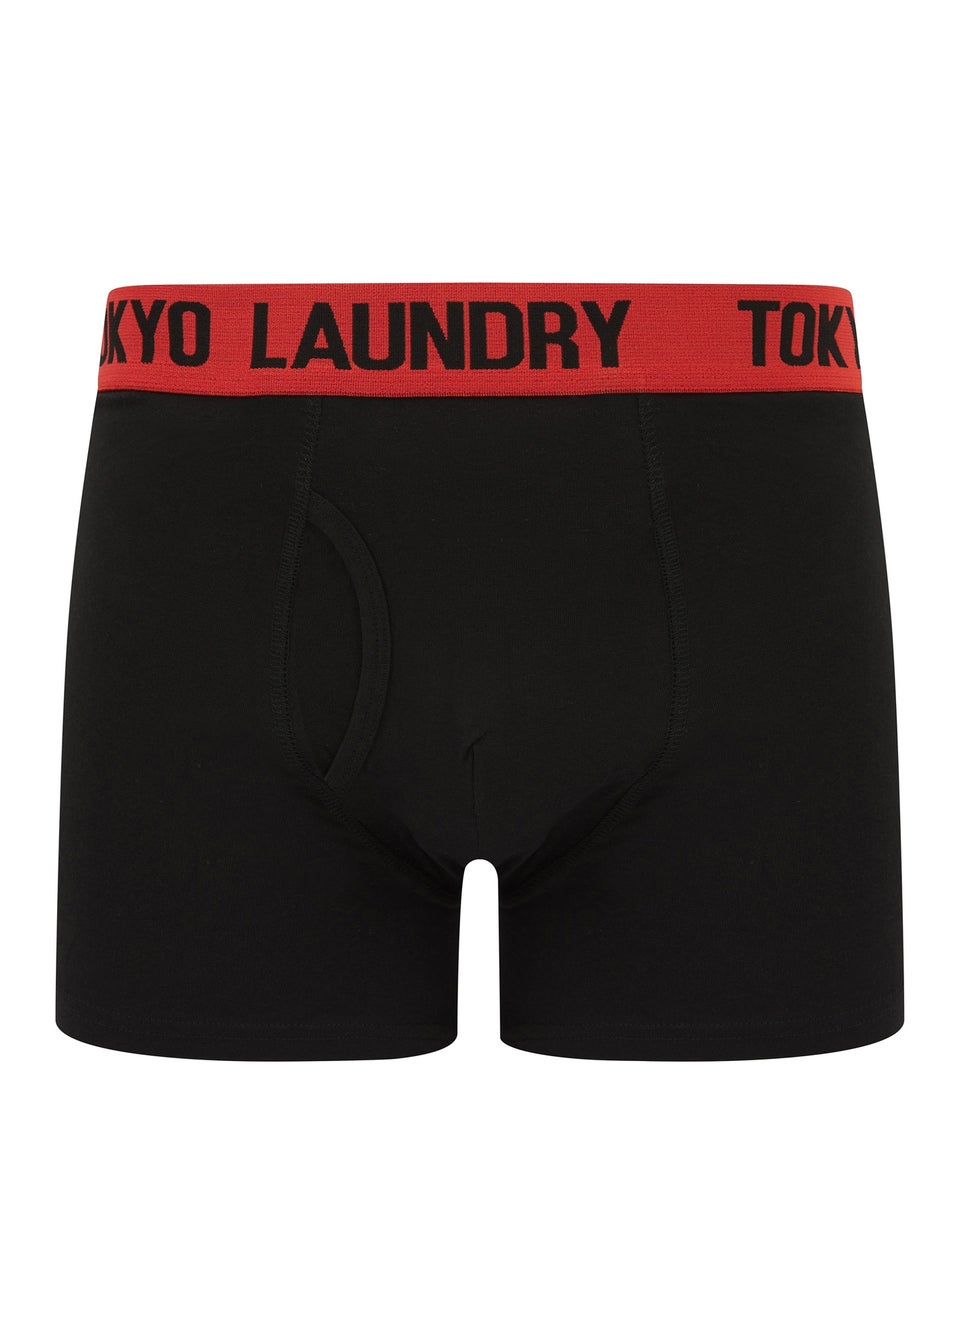 Tokyo Laundry Black Cotton 6-Pack Boxers